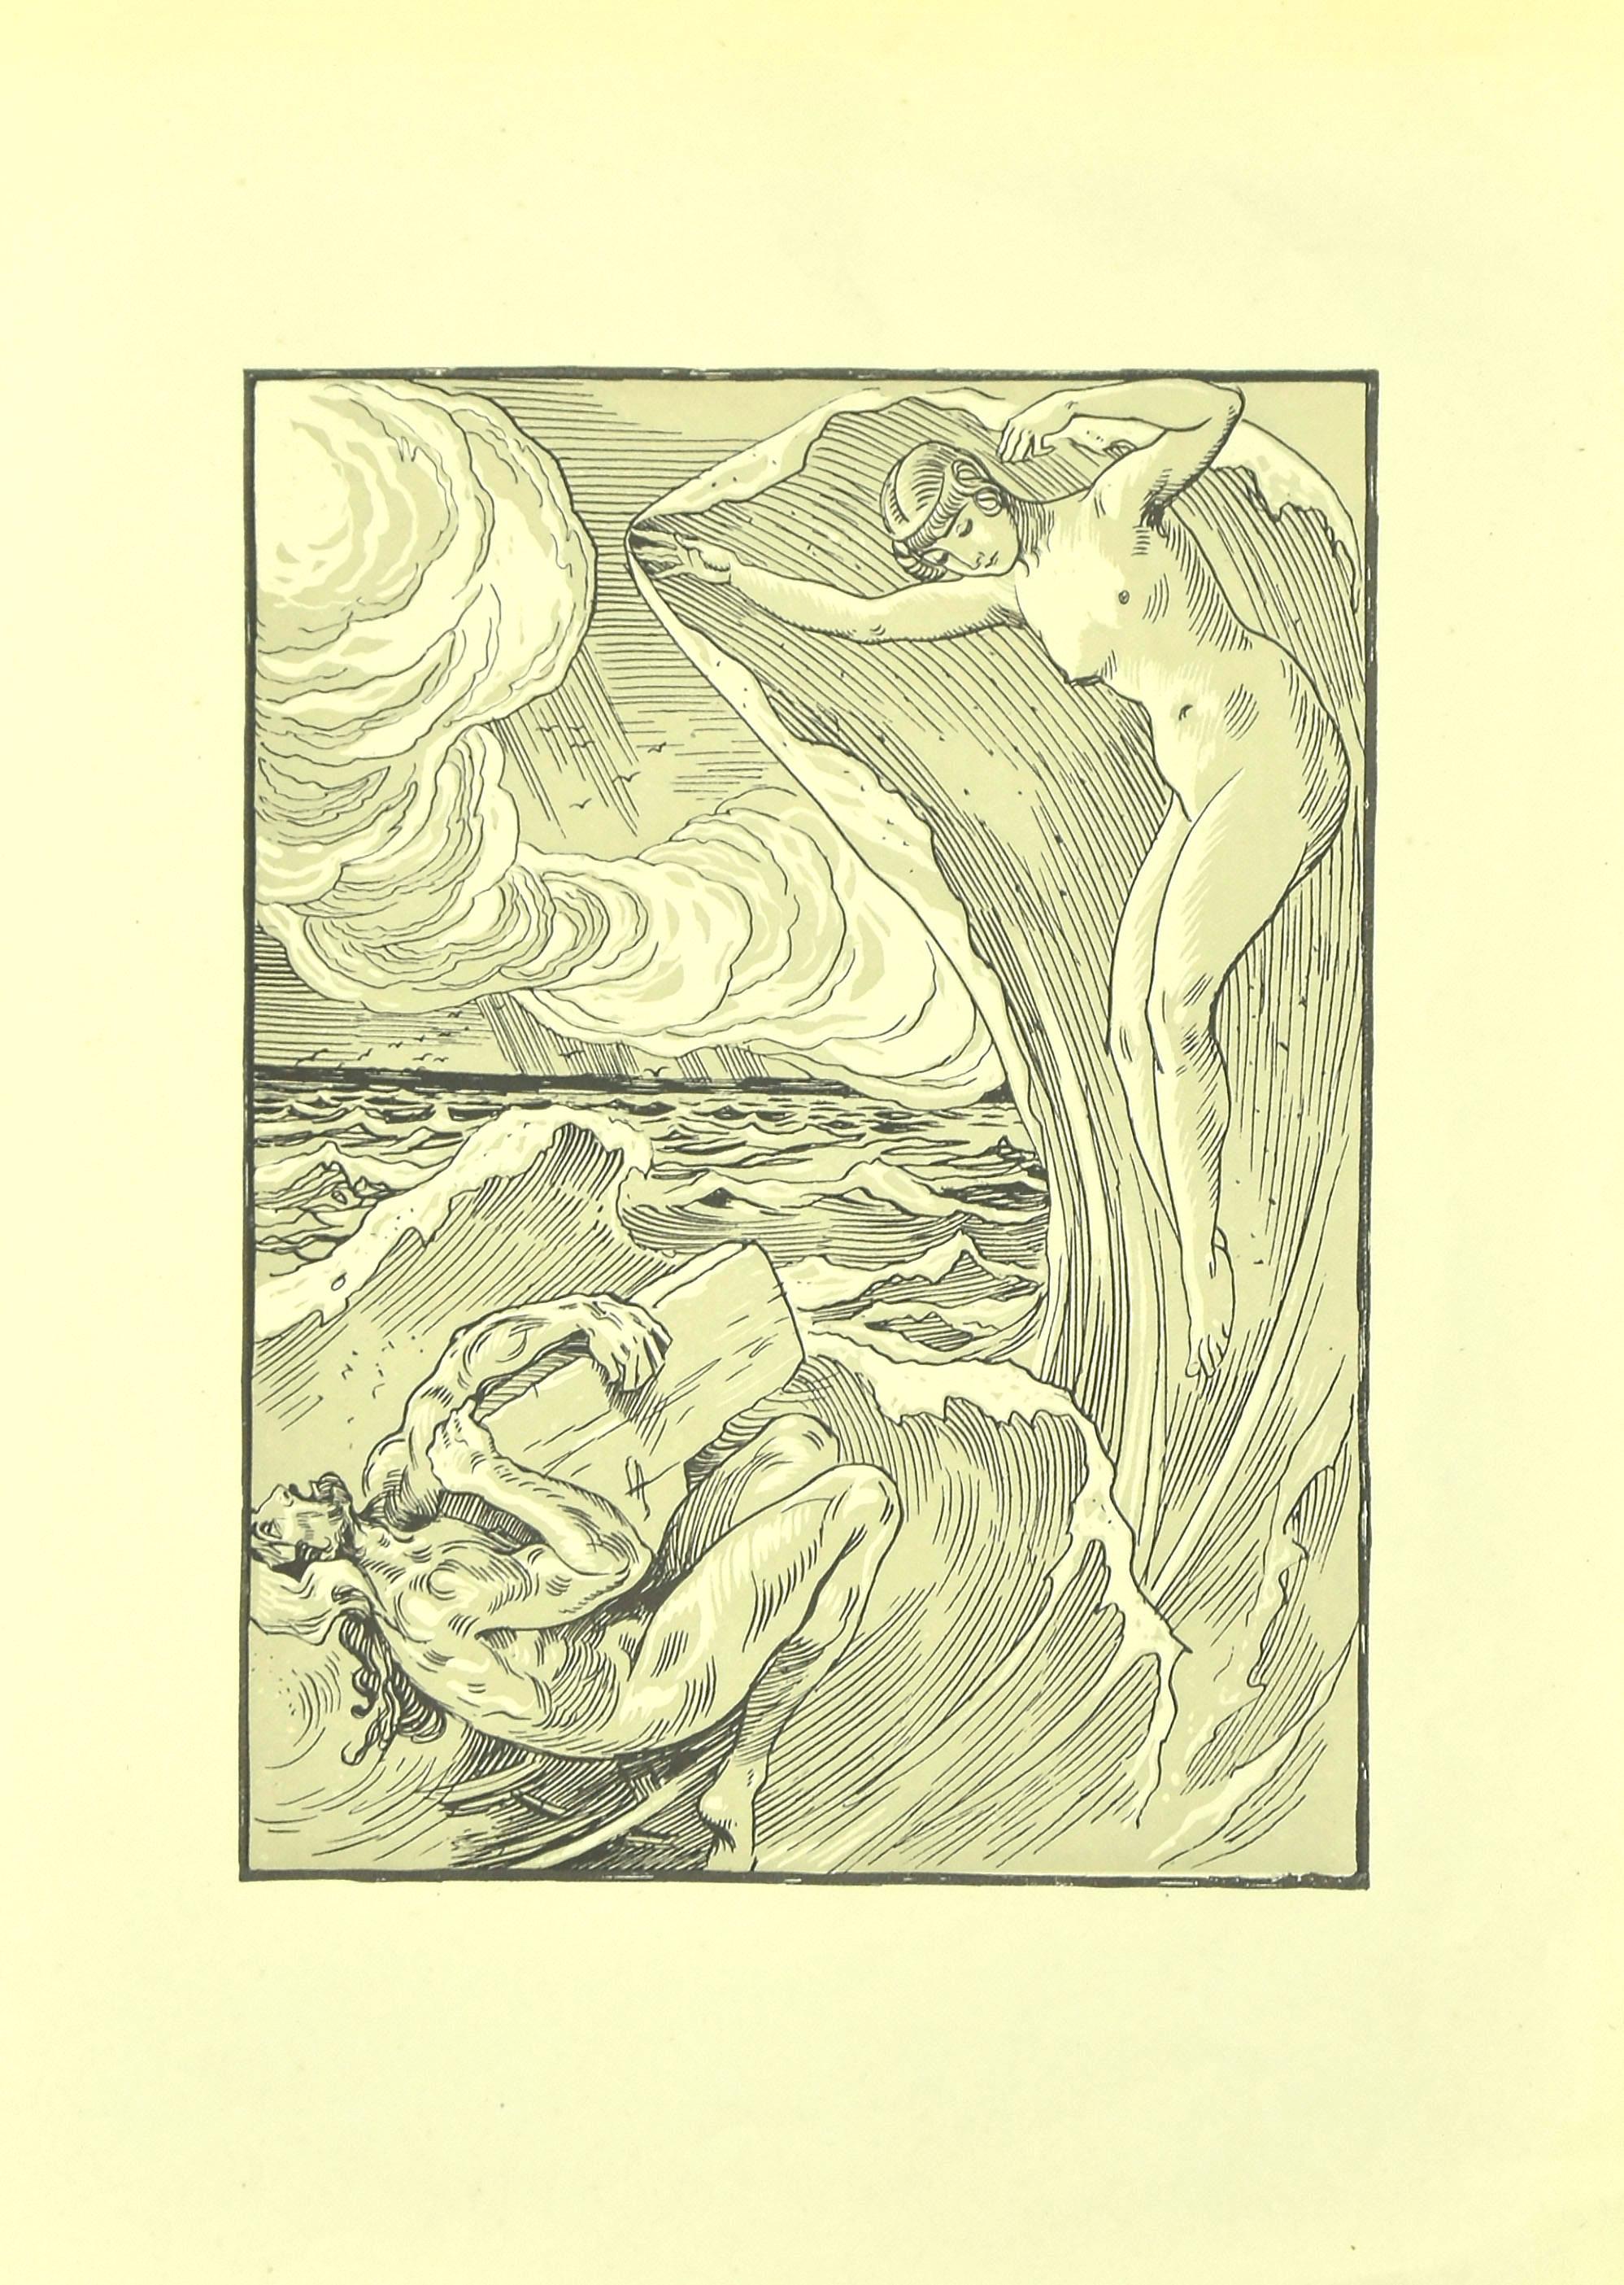 Ferdinand Bac Figurative Print - The Wave - Original Lithograph by F. Bac - 1922